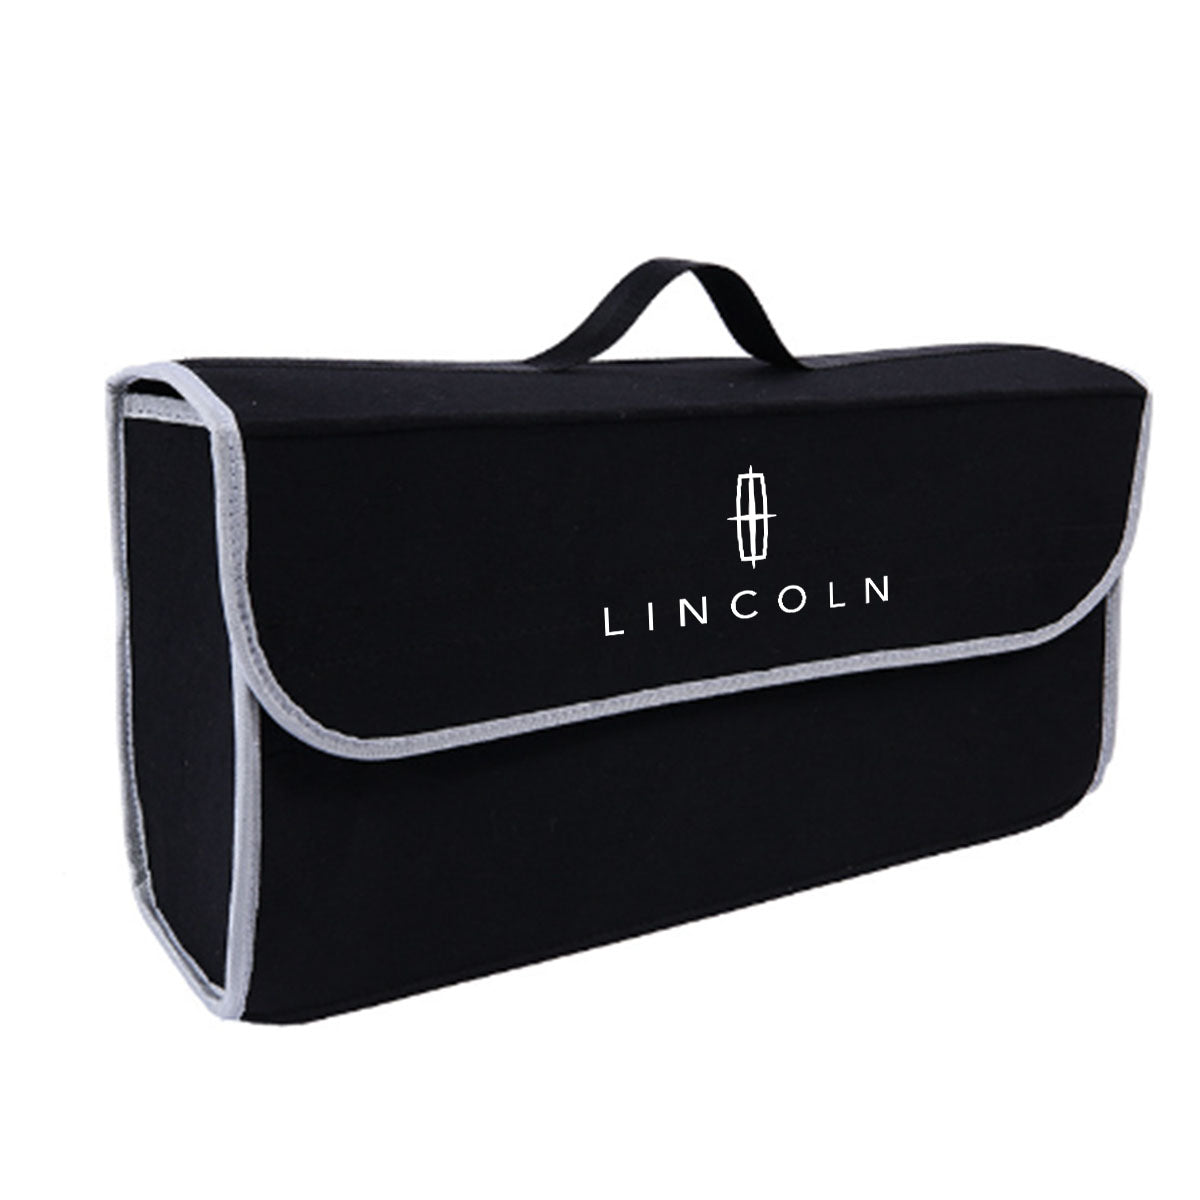 Lincoln Organizer For Car Trunk Box Storage, Car Accessories